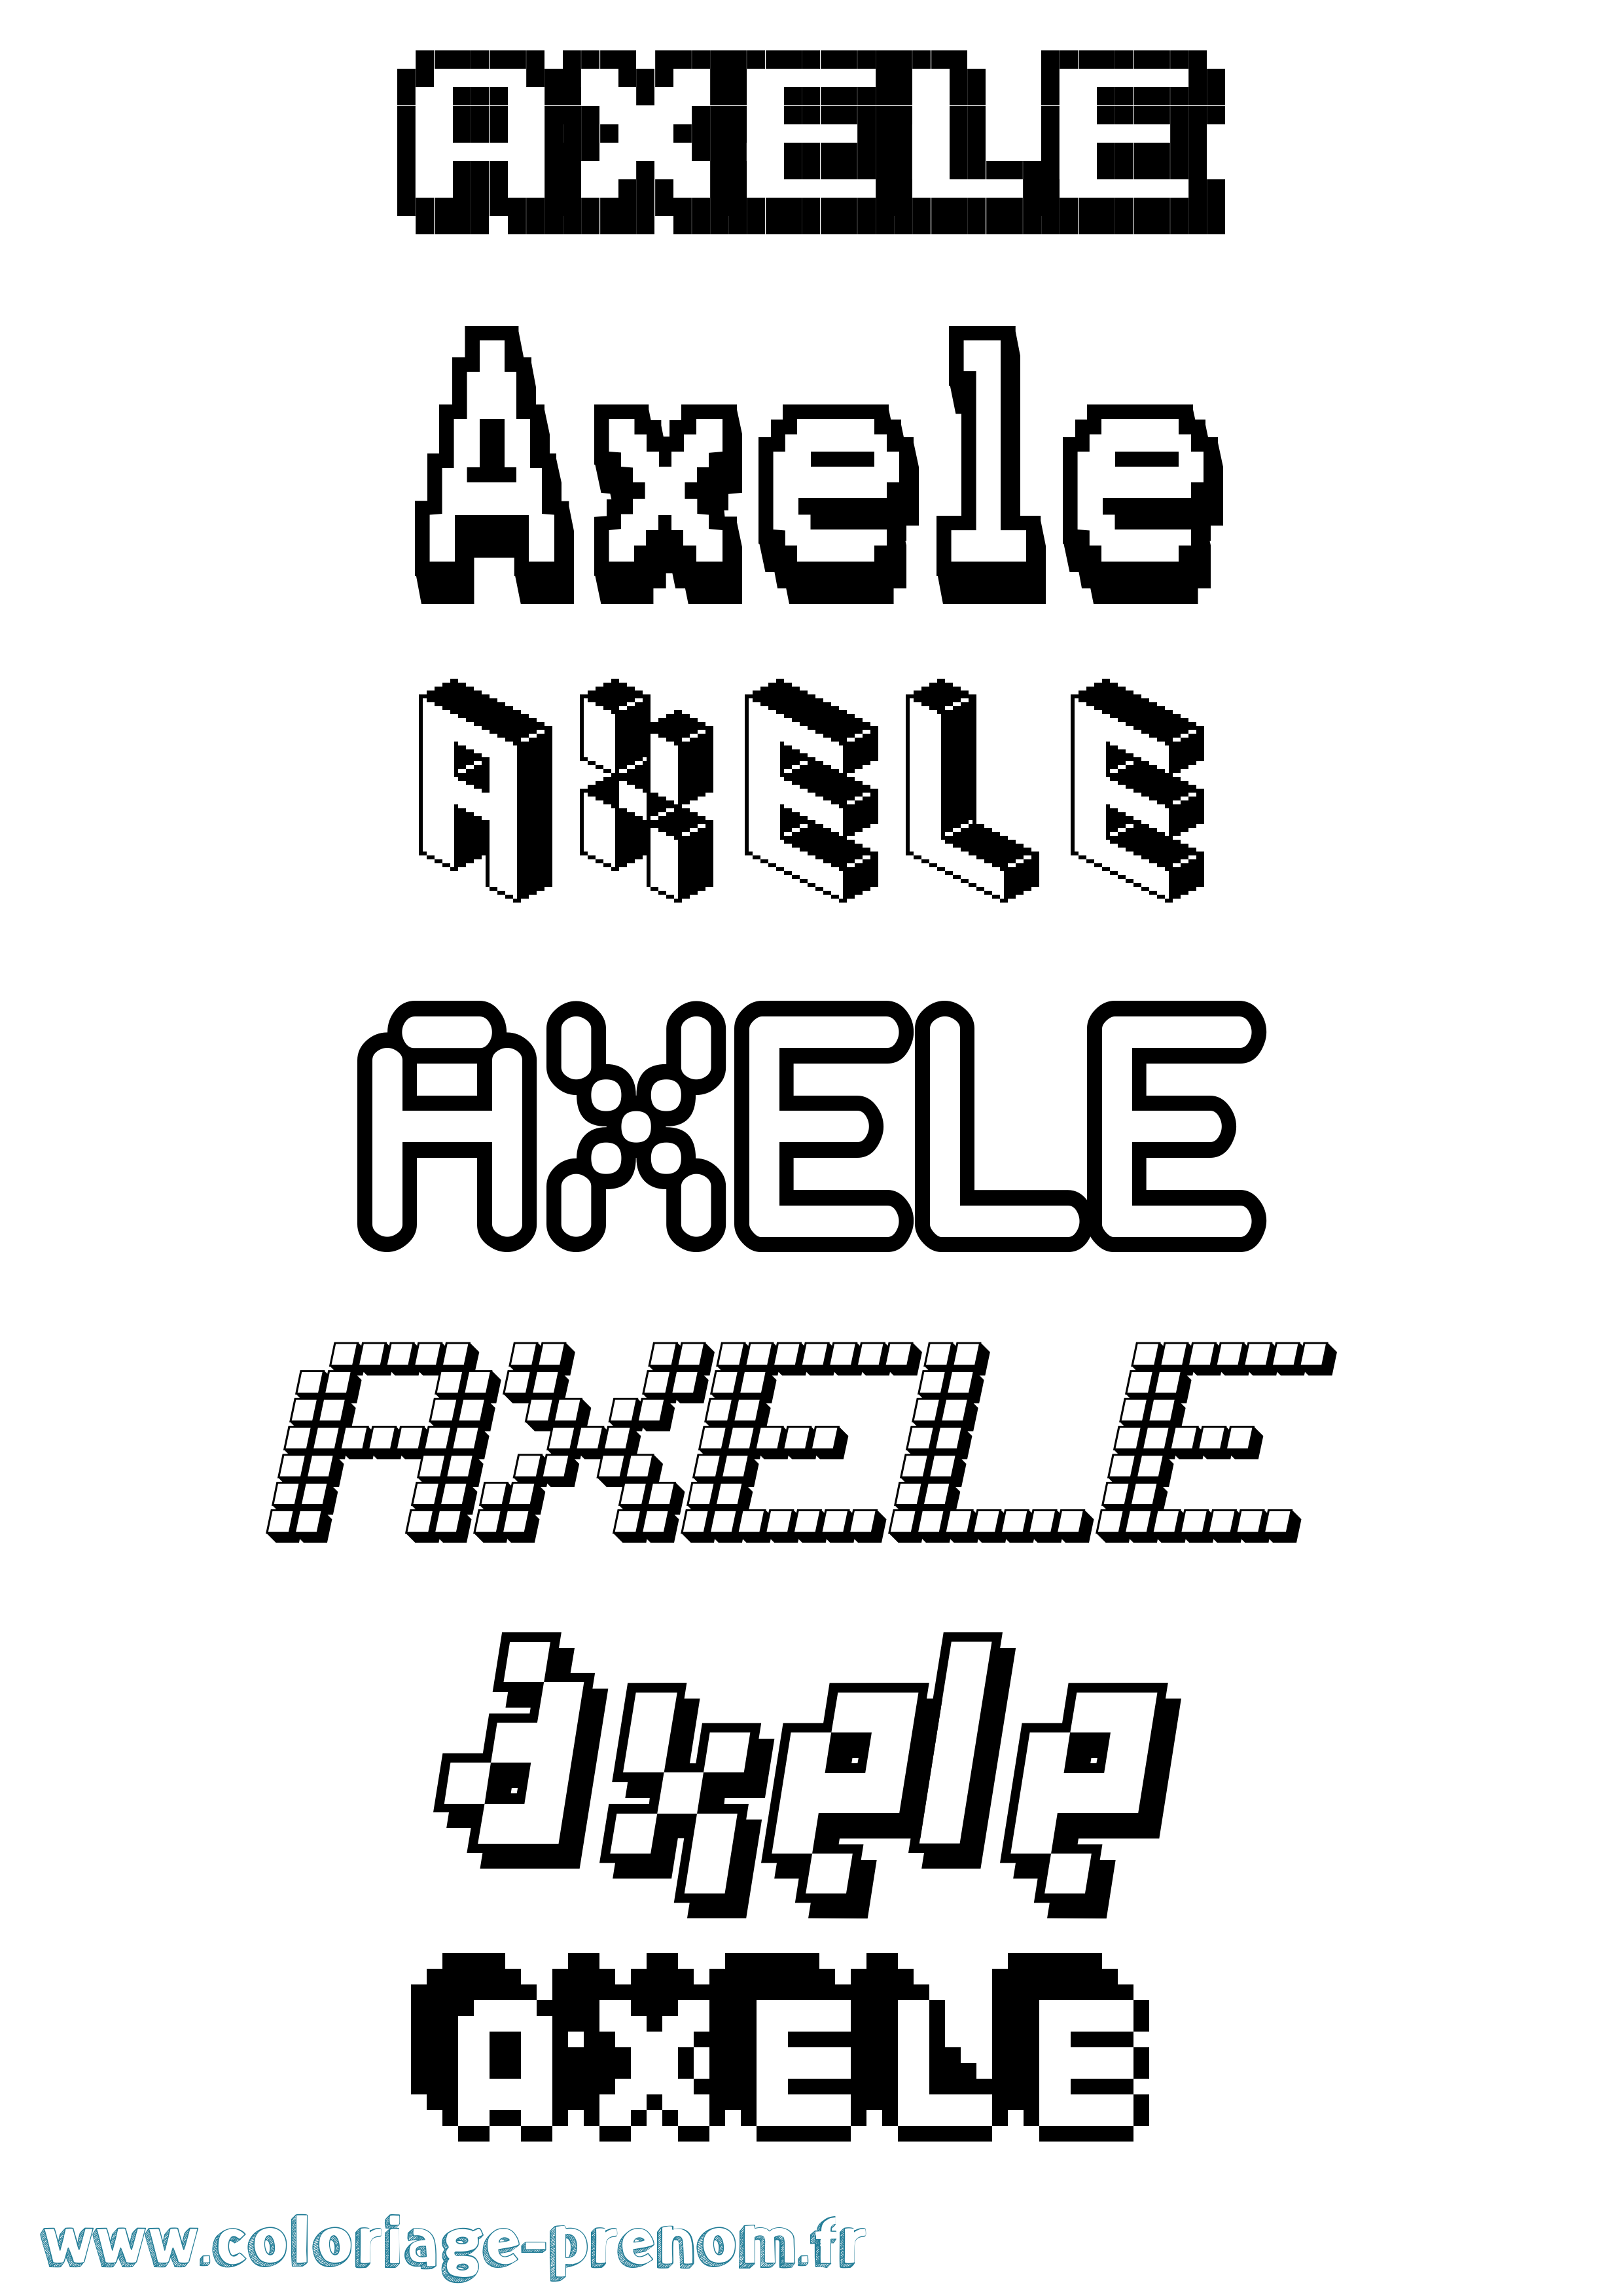 Coloriage prénom Axele Pixel